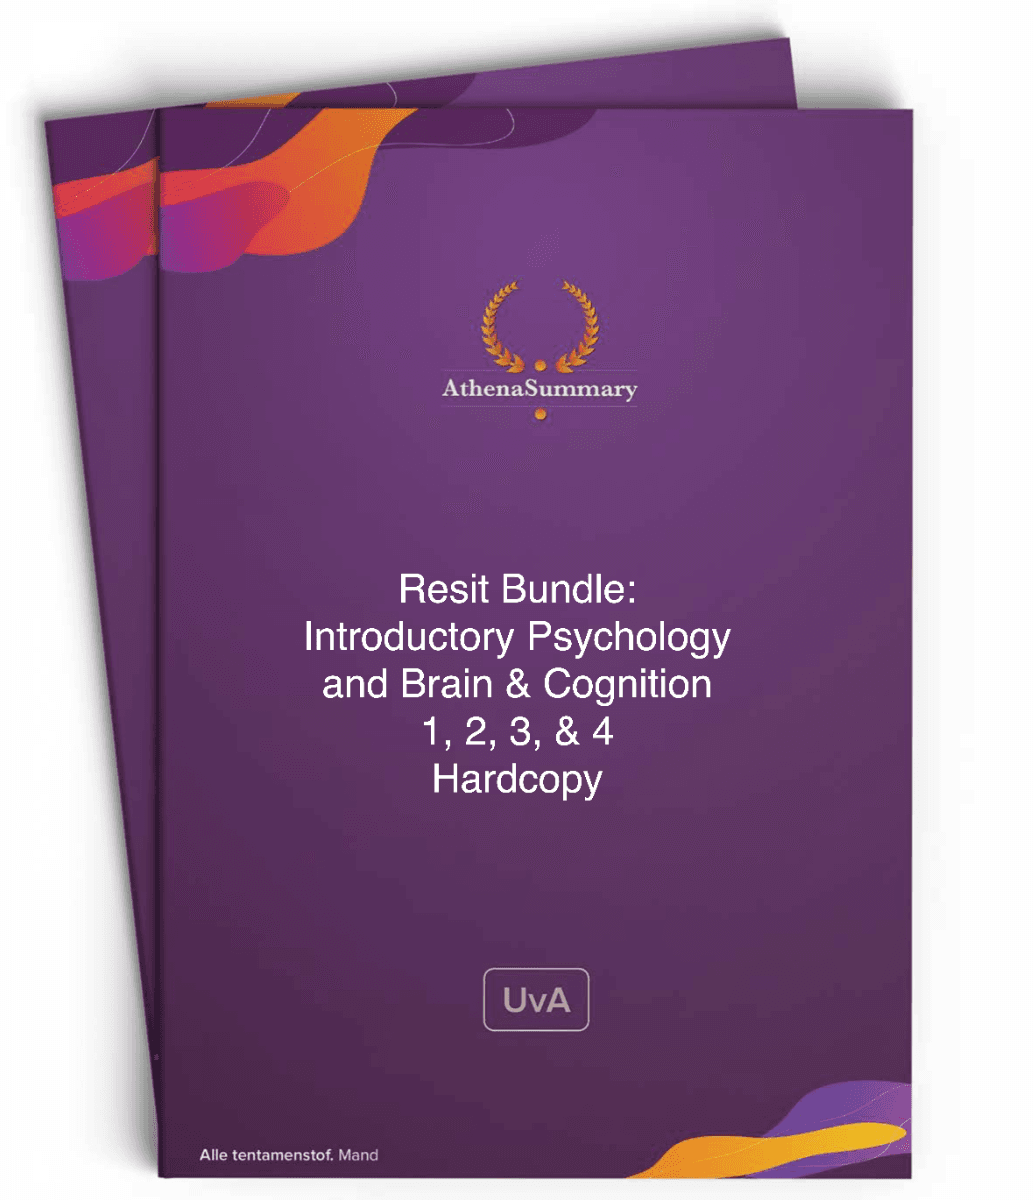 Resit Bundle: Introductory Psychology and Brain & Cognition - Hardcopy